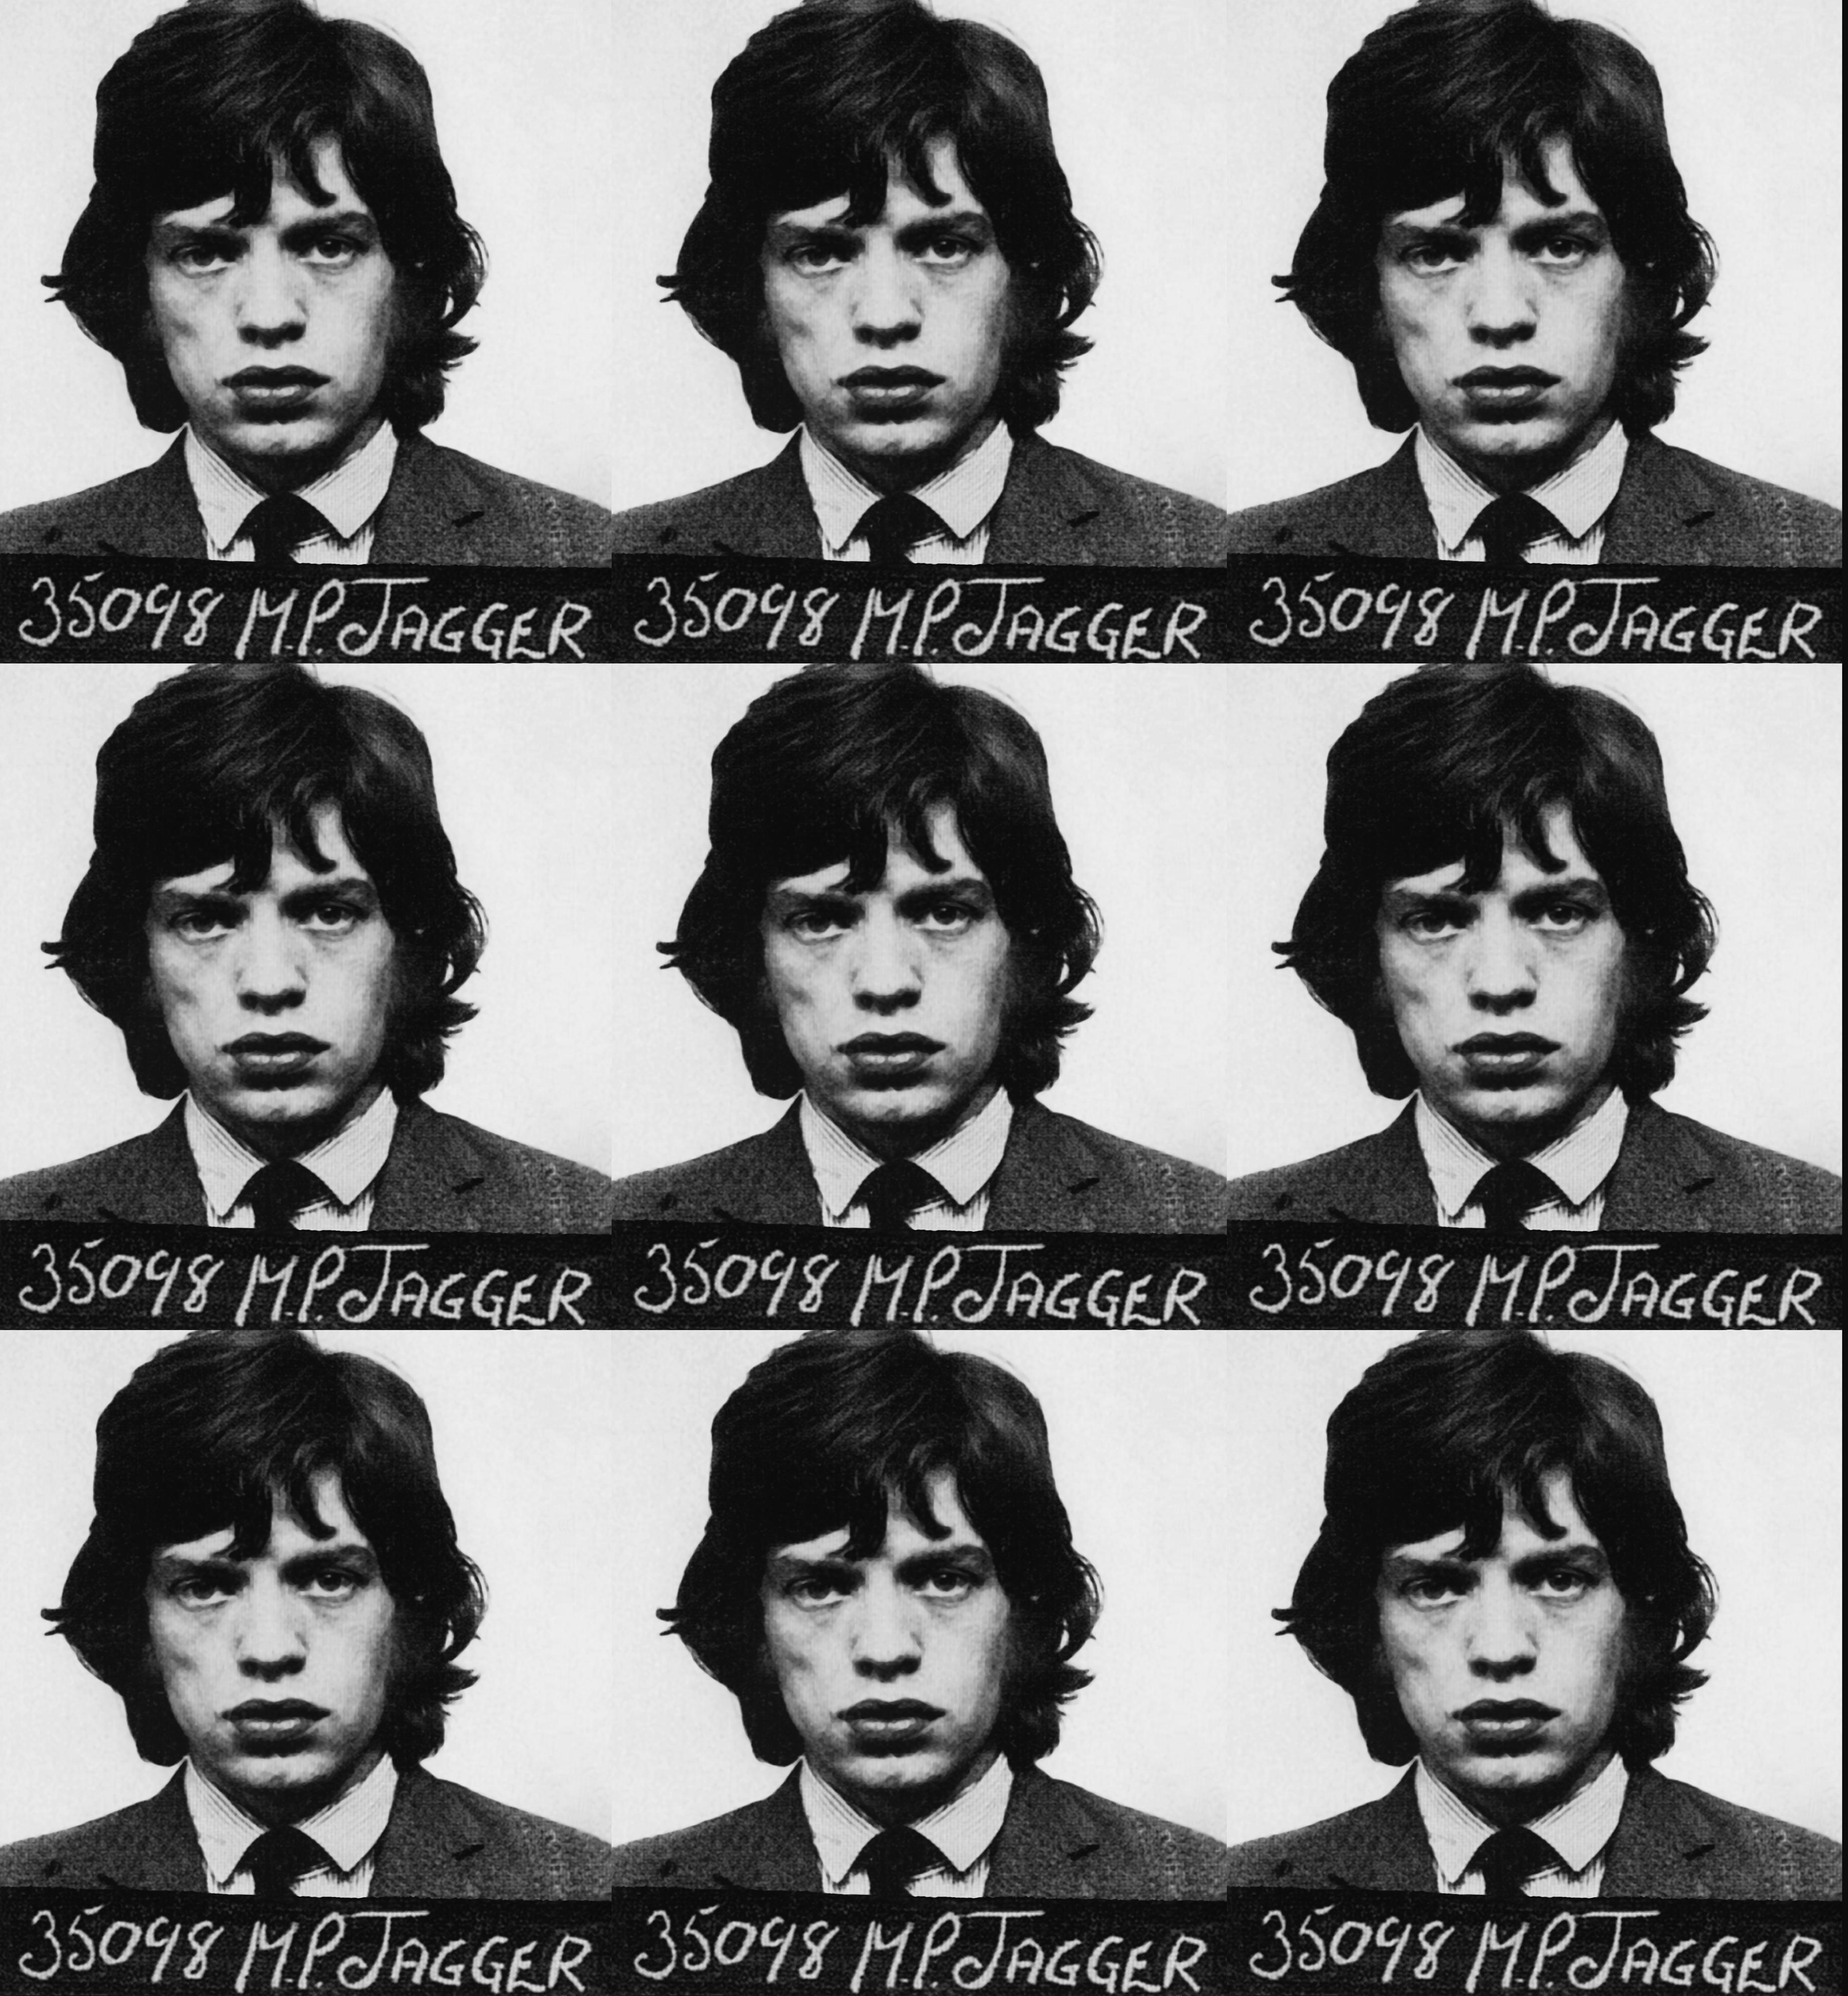 "Mick Jagger Mugshot" Print 39 x 36 inch Edition of 75 by Gerard Marti